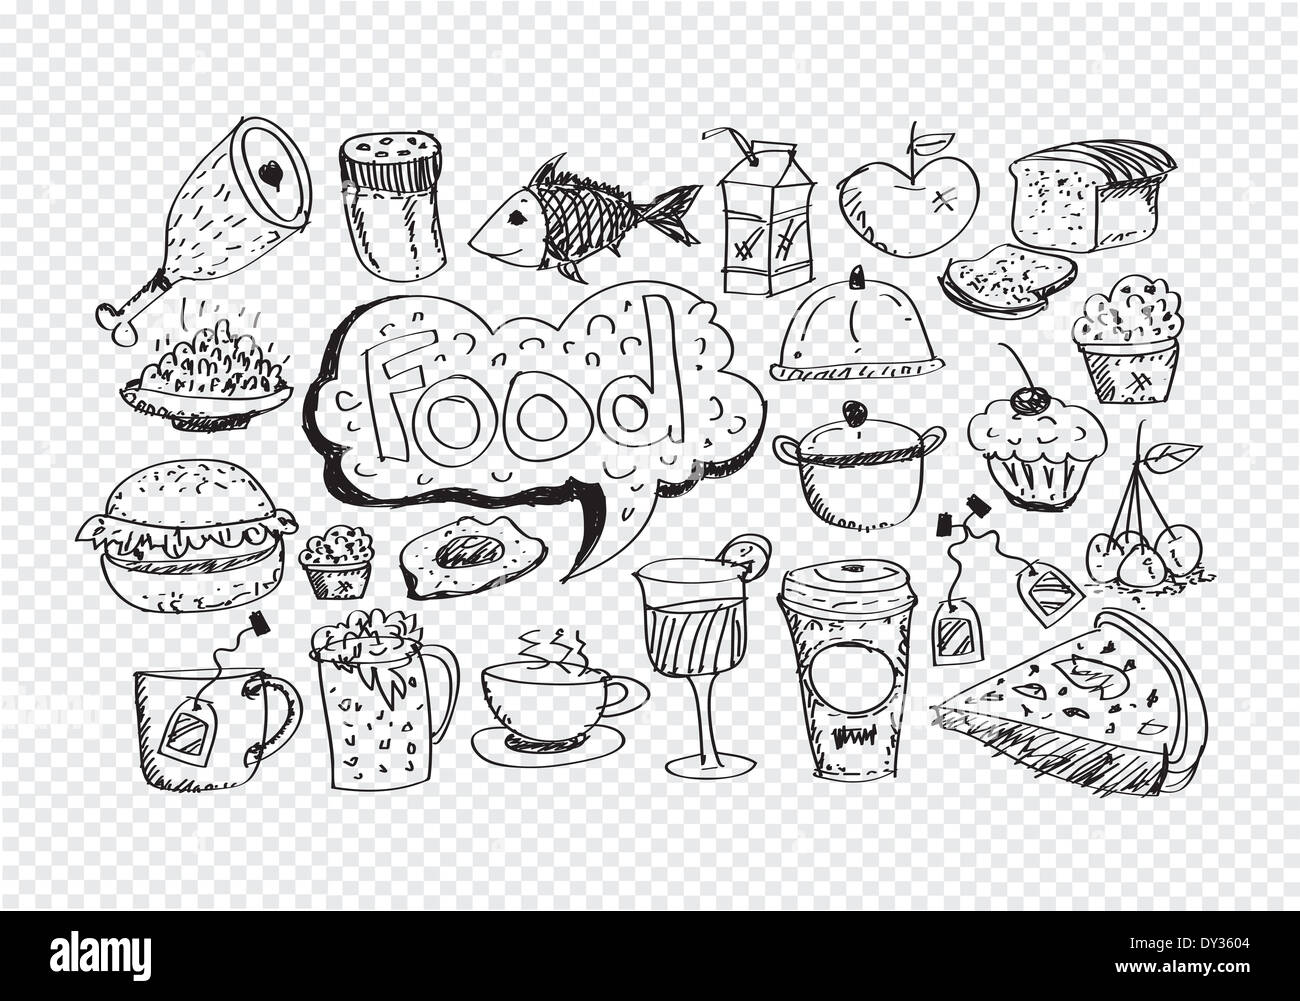 Food Icons Stock Photo